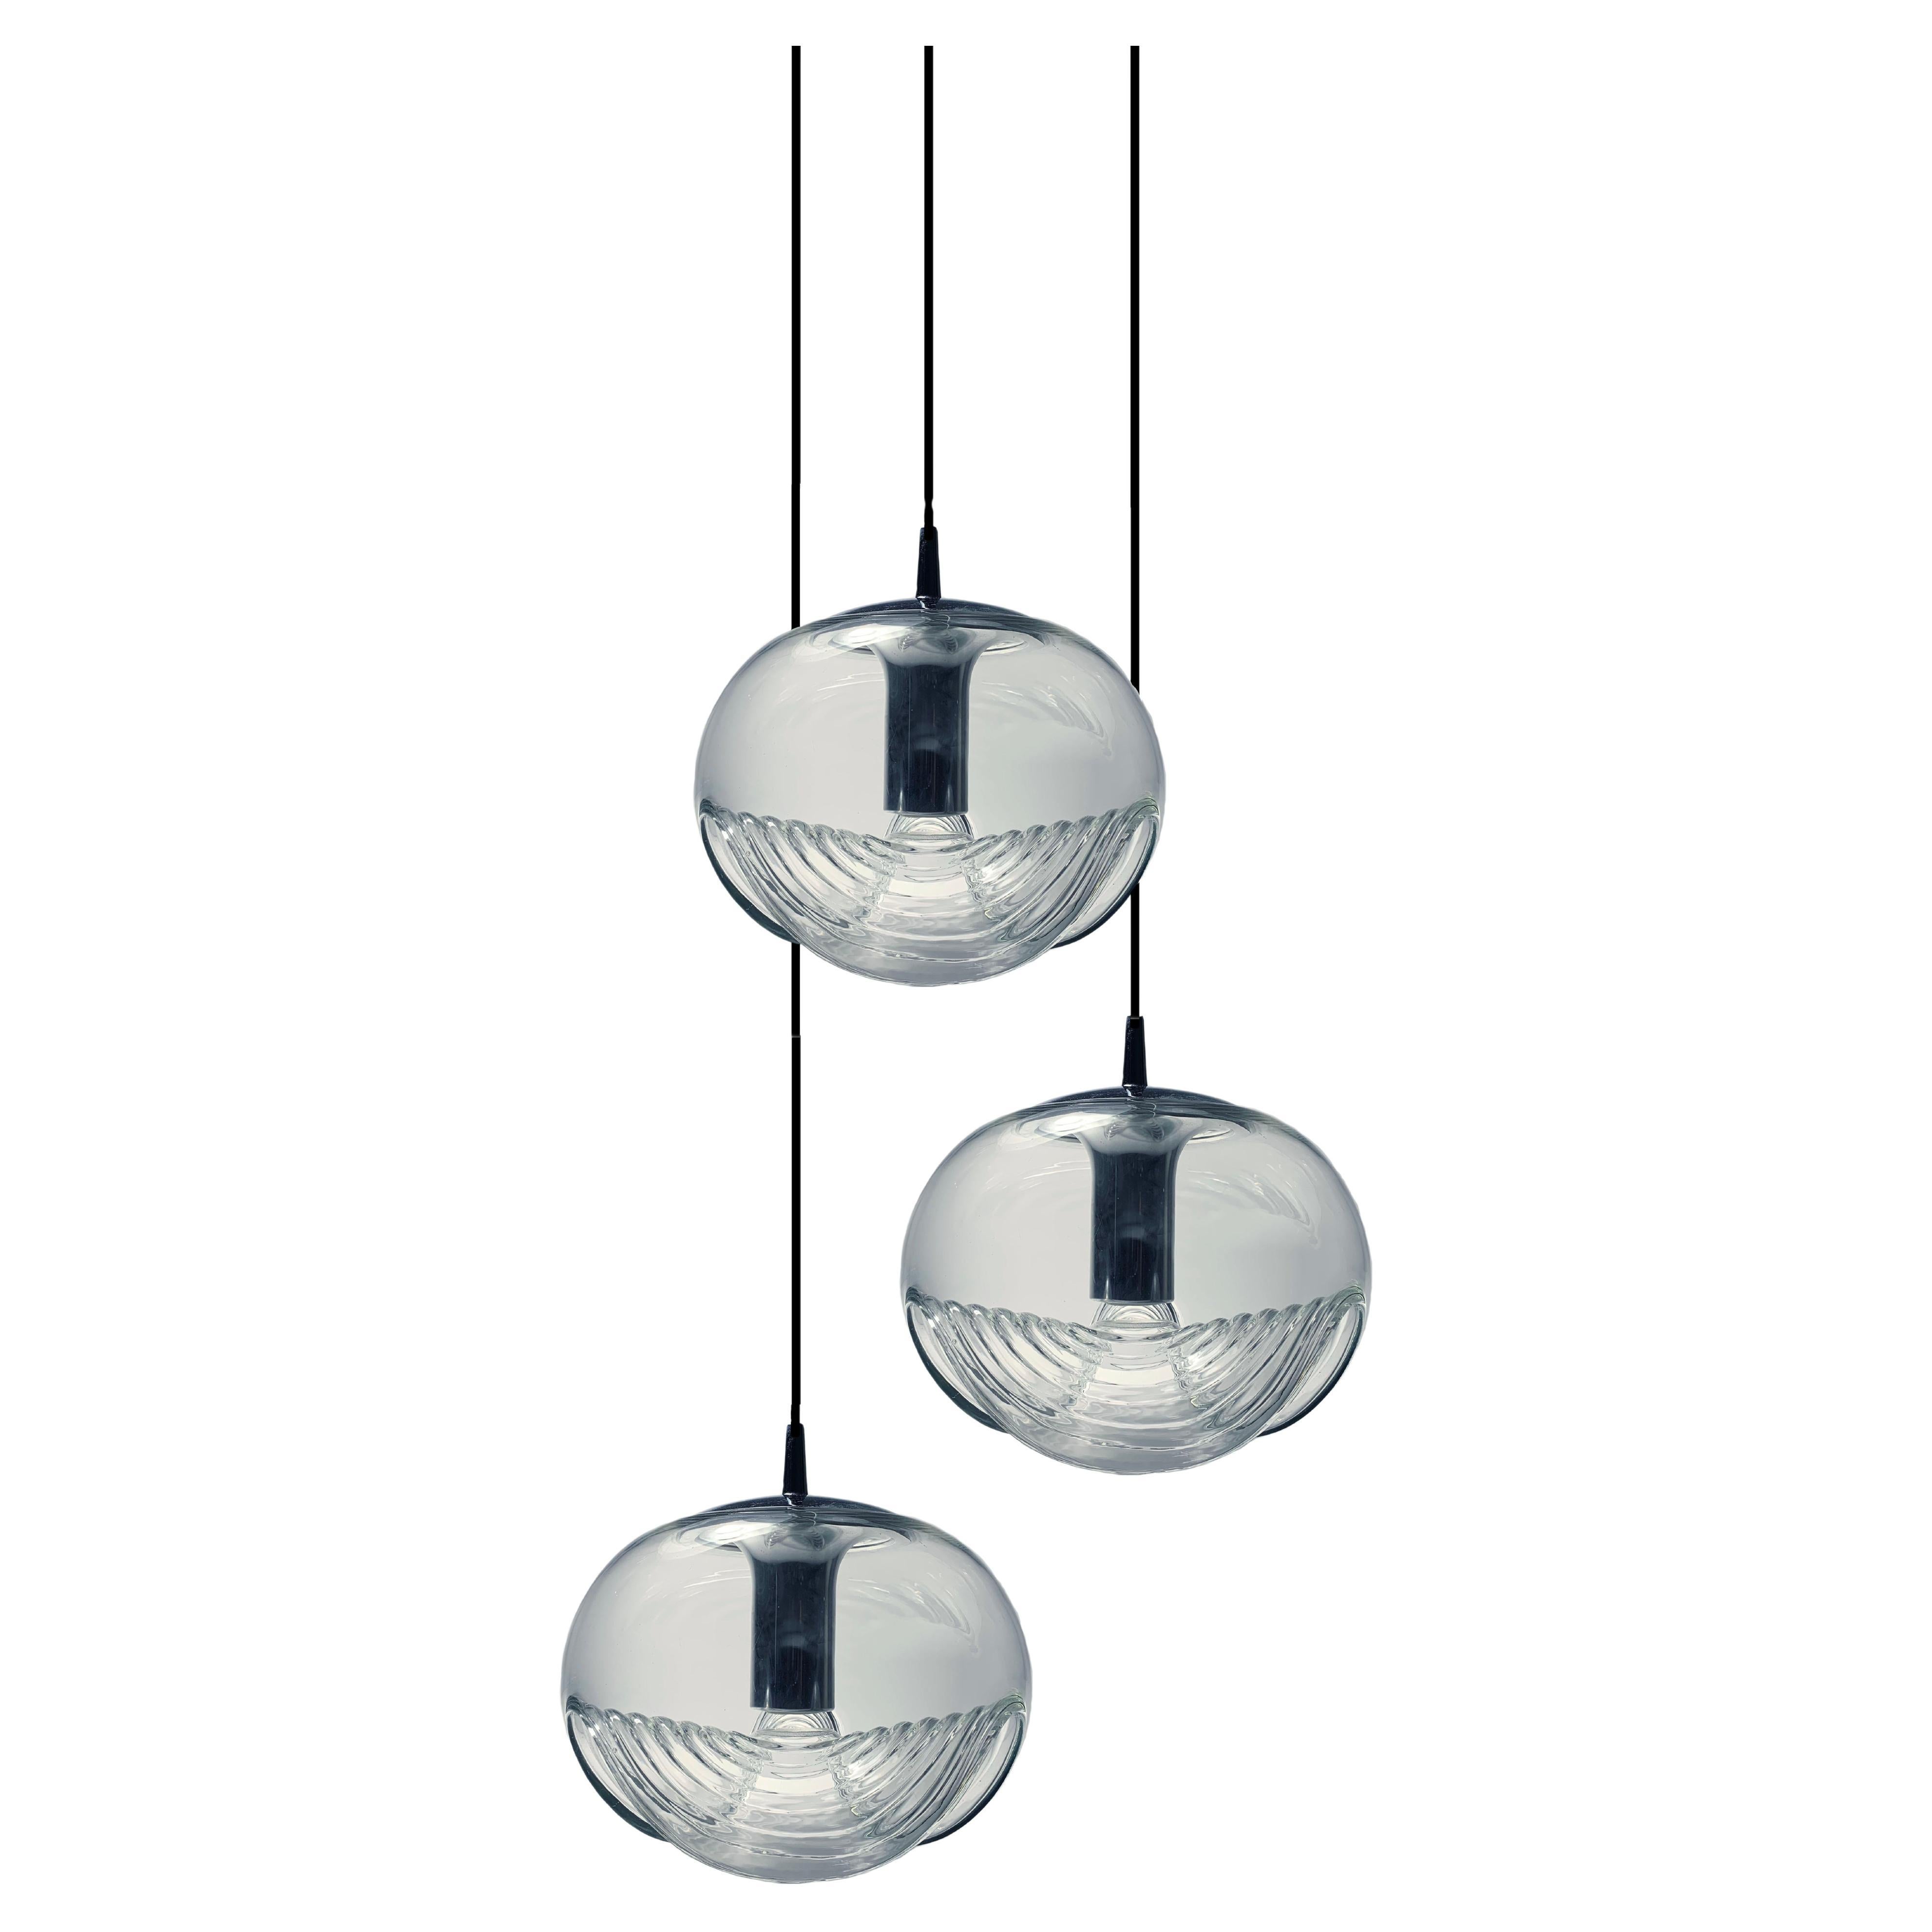 Peill & Putzler Futura "THREE" lampe à suspension WAVES pour Koch & Lowy